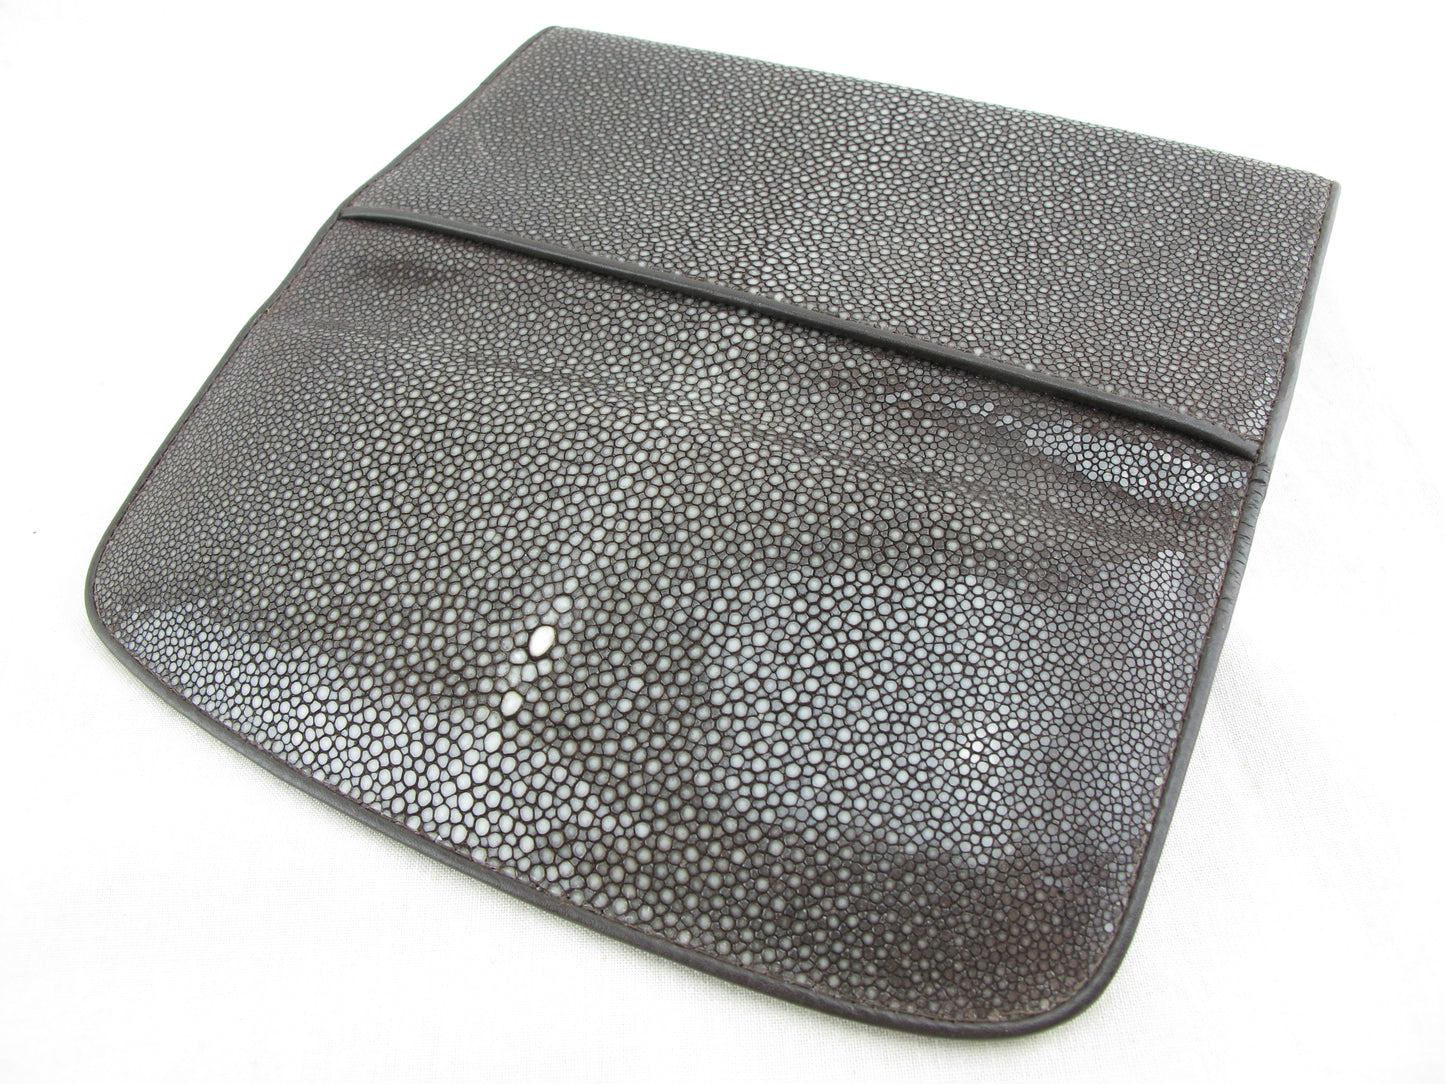 Genuine Polished Stingray Skin Leather Women's Trifold Clutch Wallet Purse